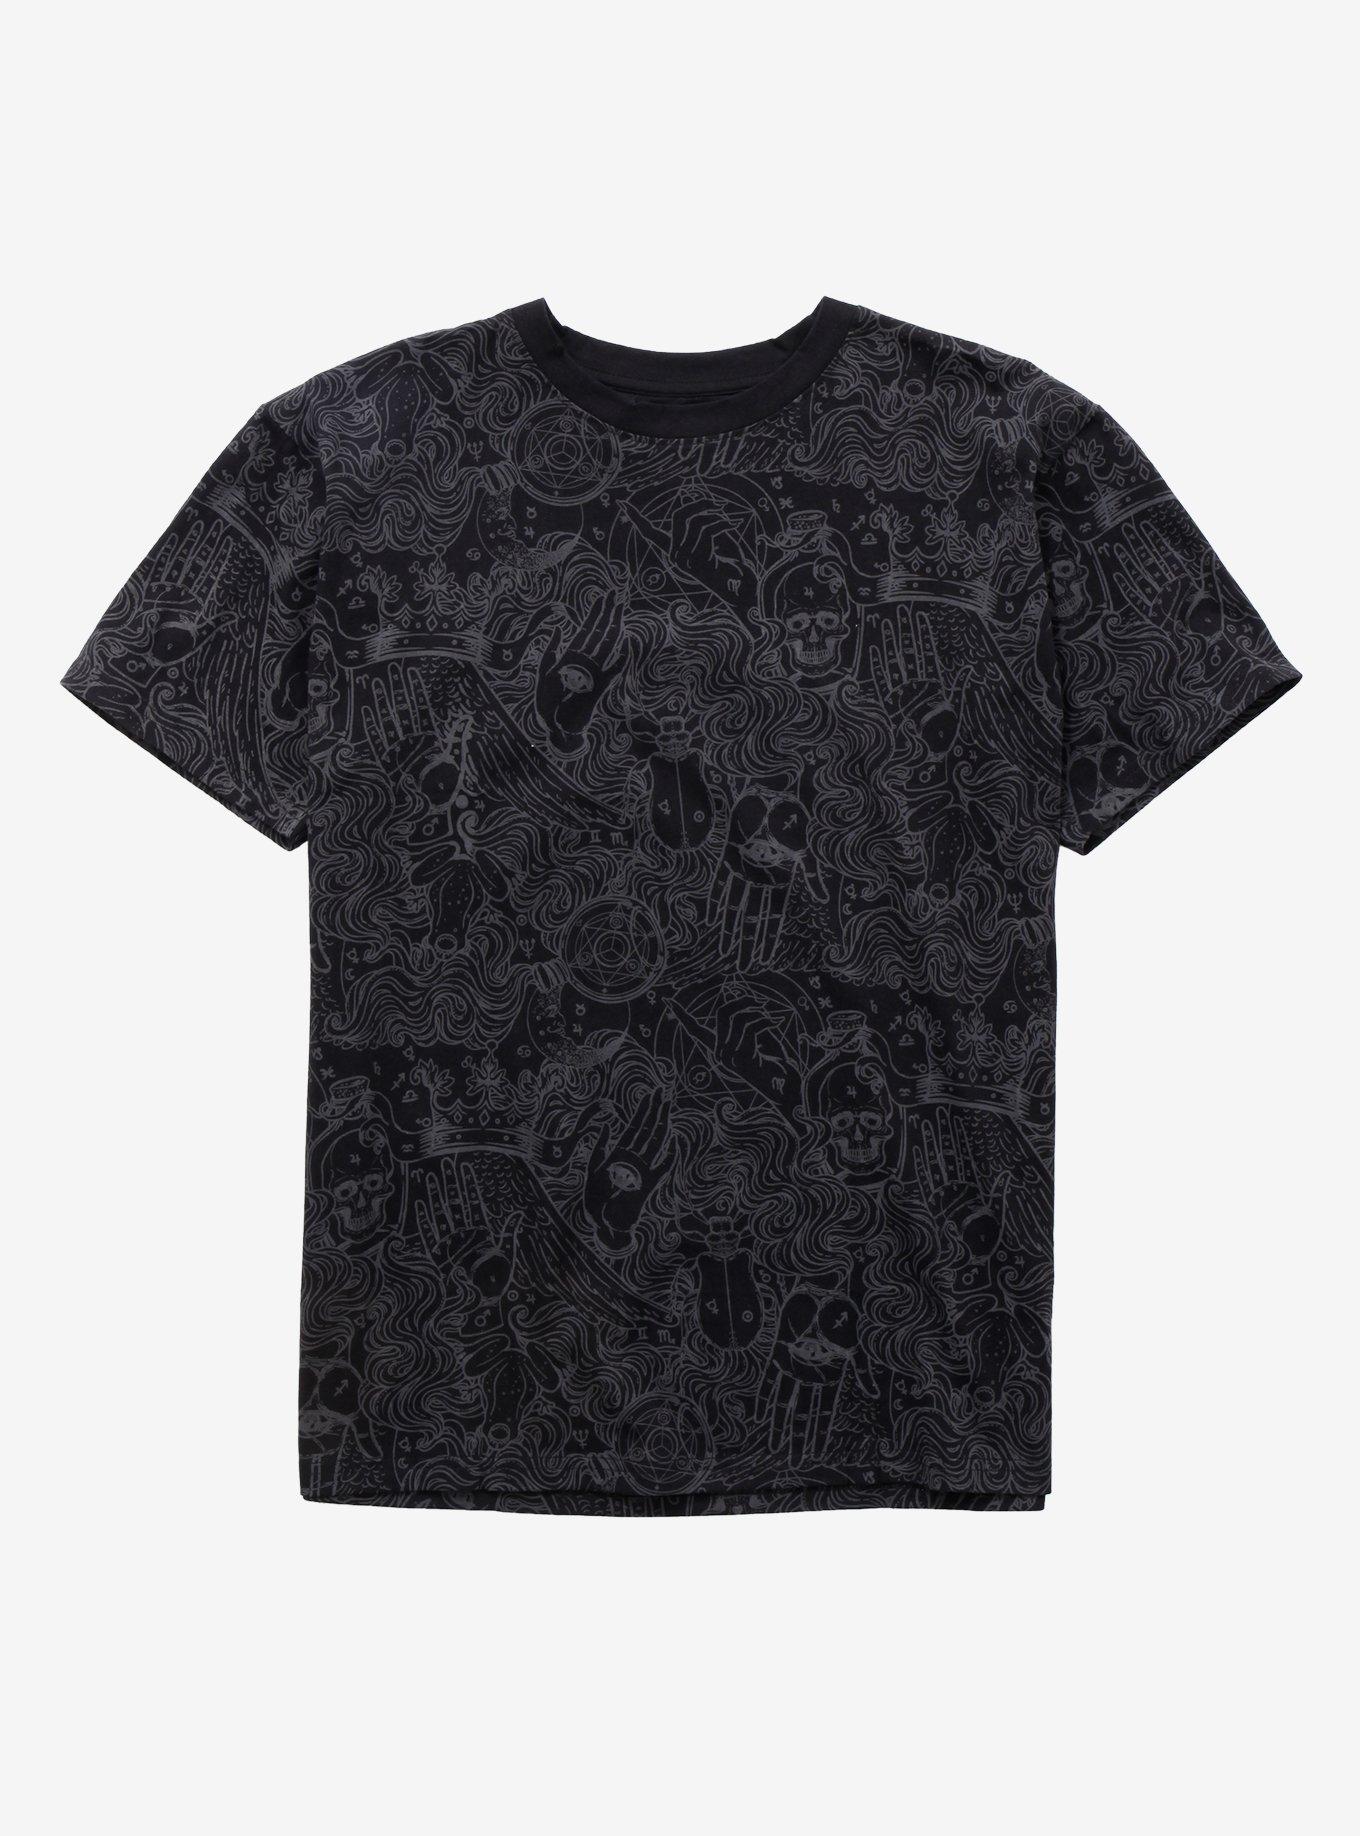 Alchemy Swirls Black & Grey T-Shirt, BLACK, hi-res